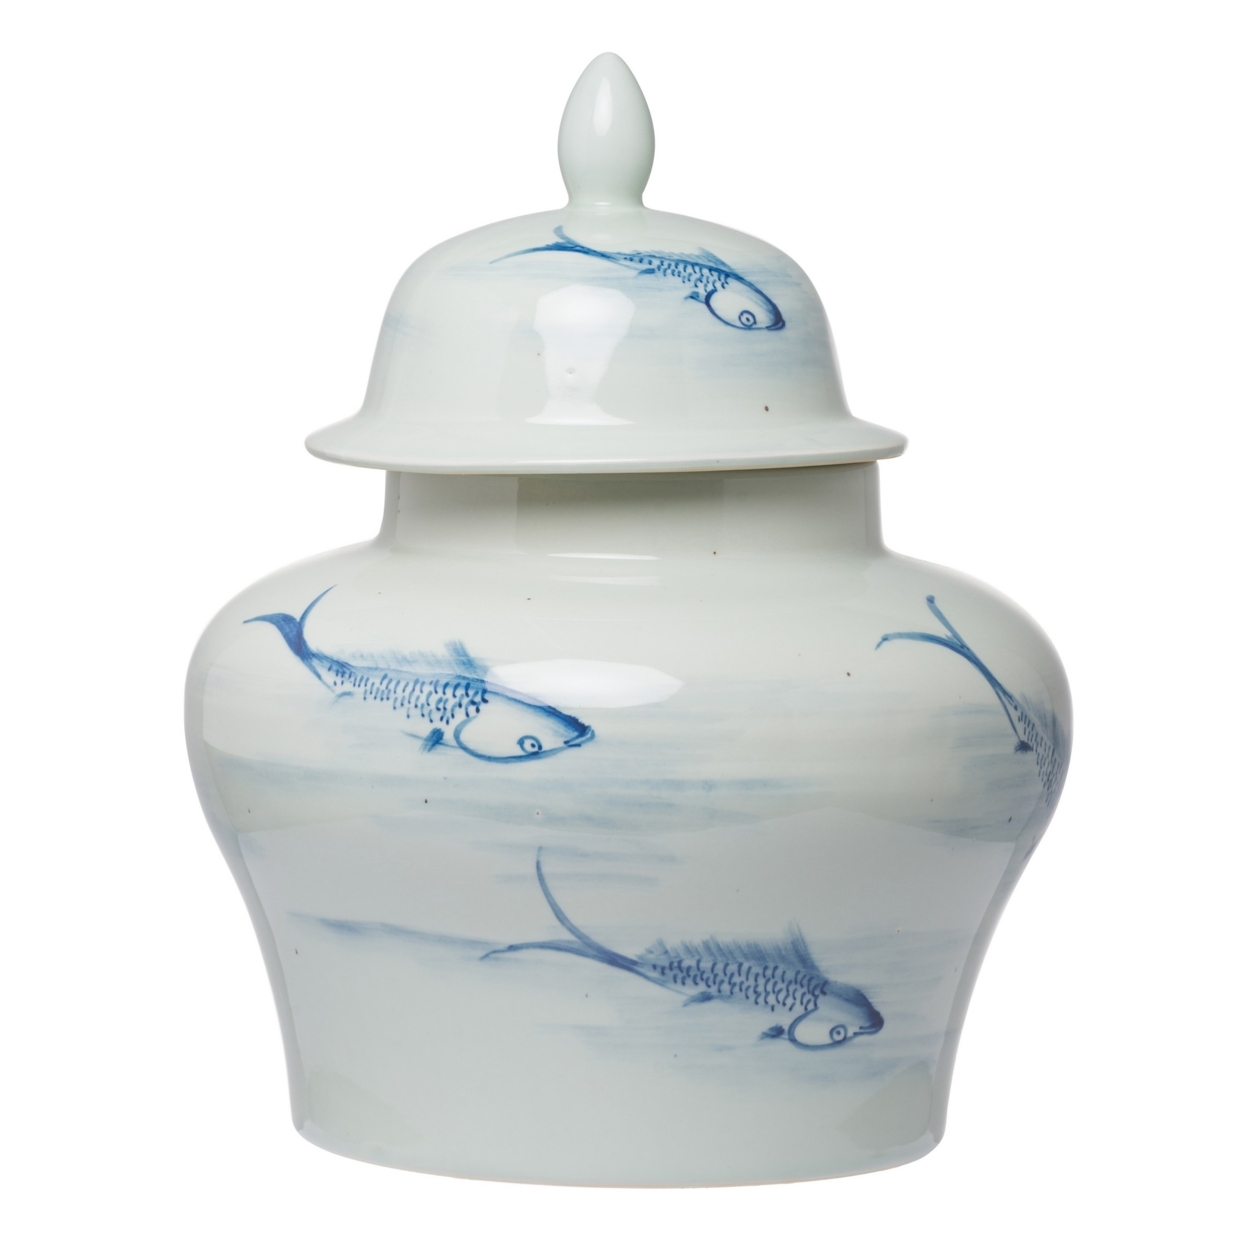 18 Inch Porcelain Ginger Jar, Artful Wispy Fish, Classic White And Blue- Saltoro Sherpi